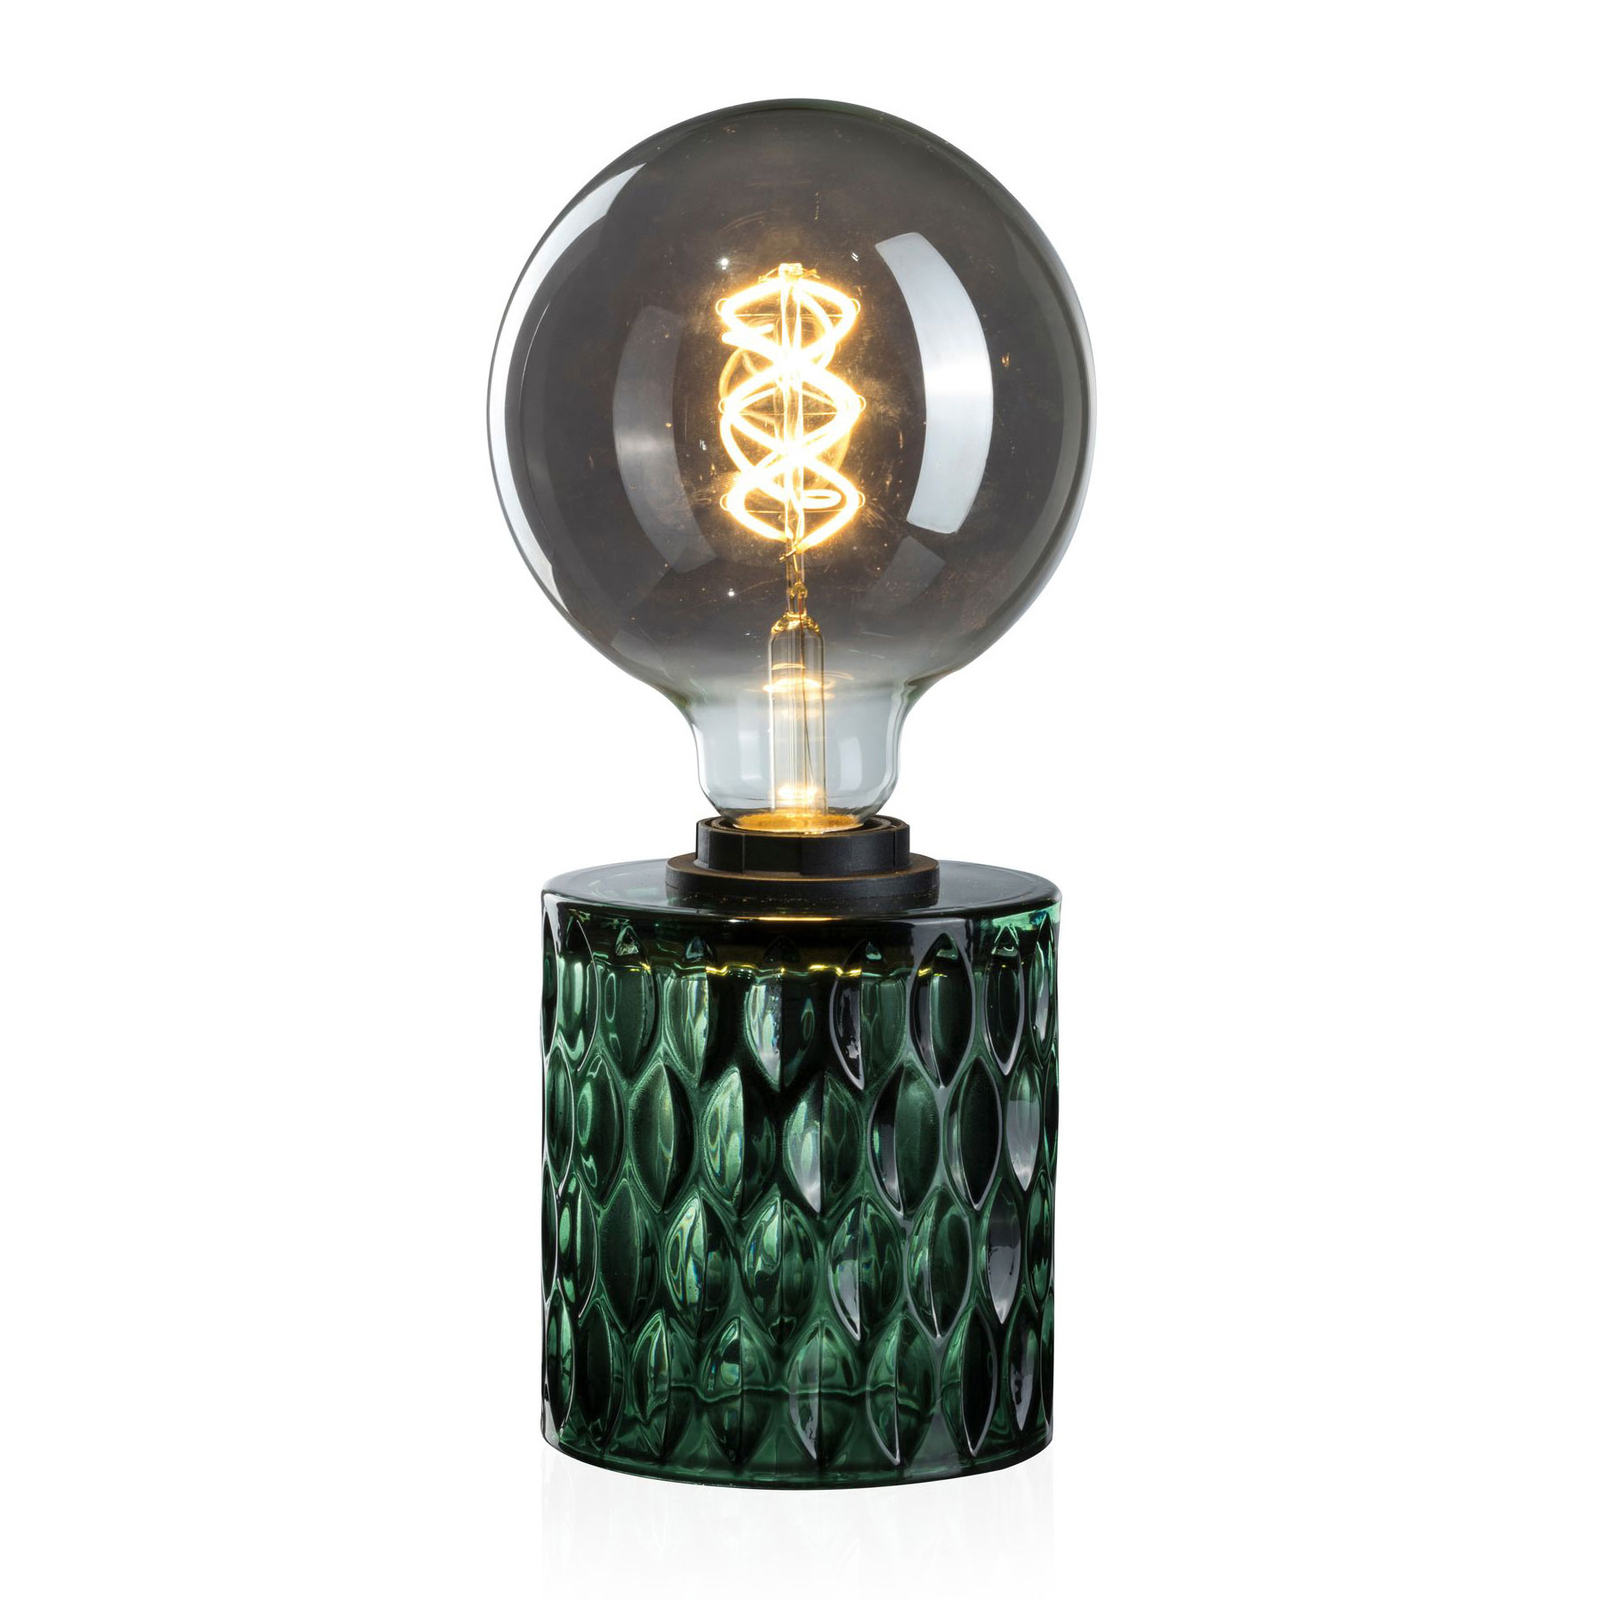 Pauleen Crystal Magic lampe à poser en verre vert